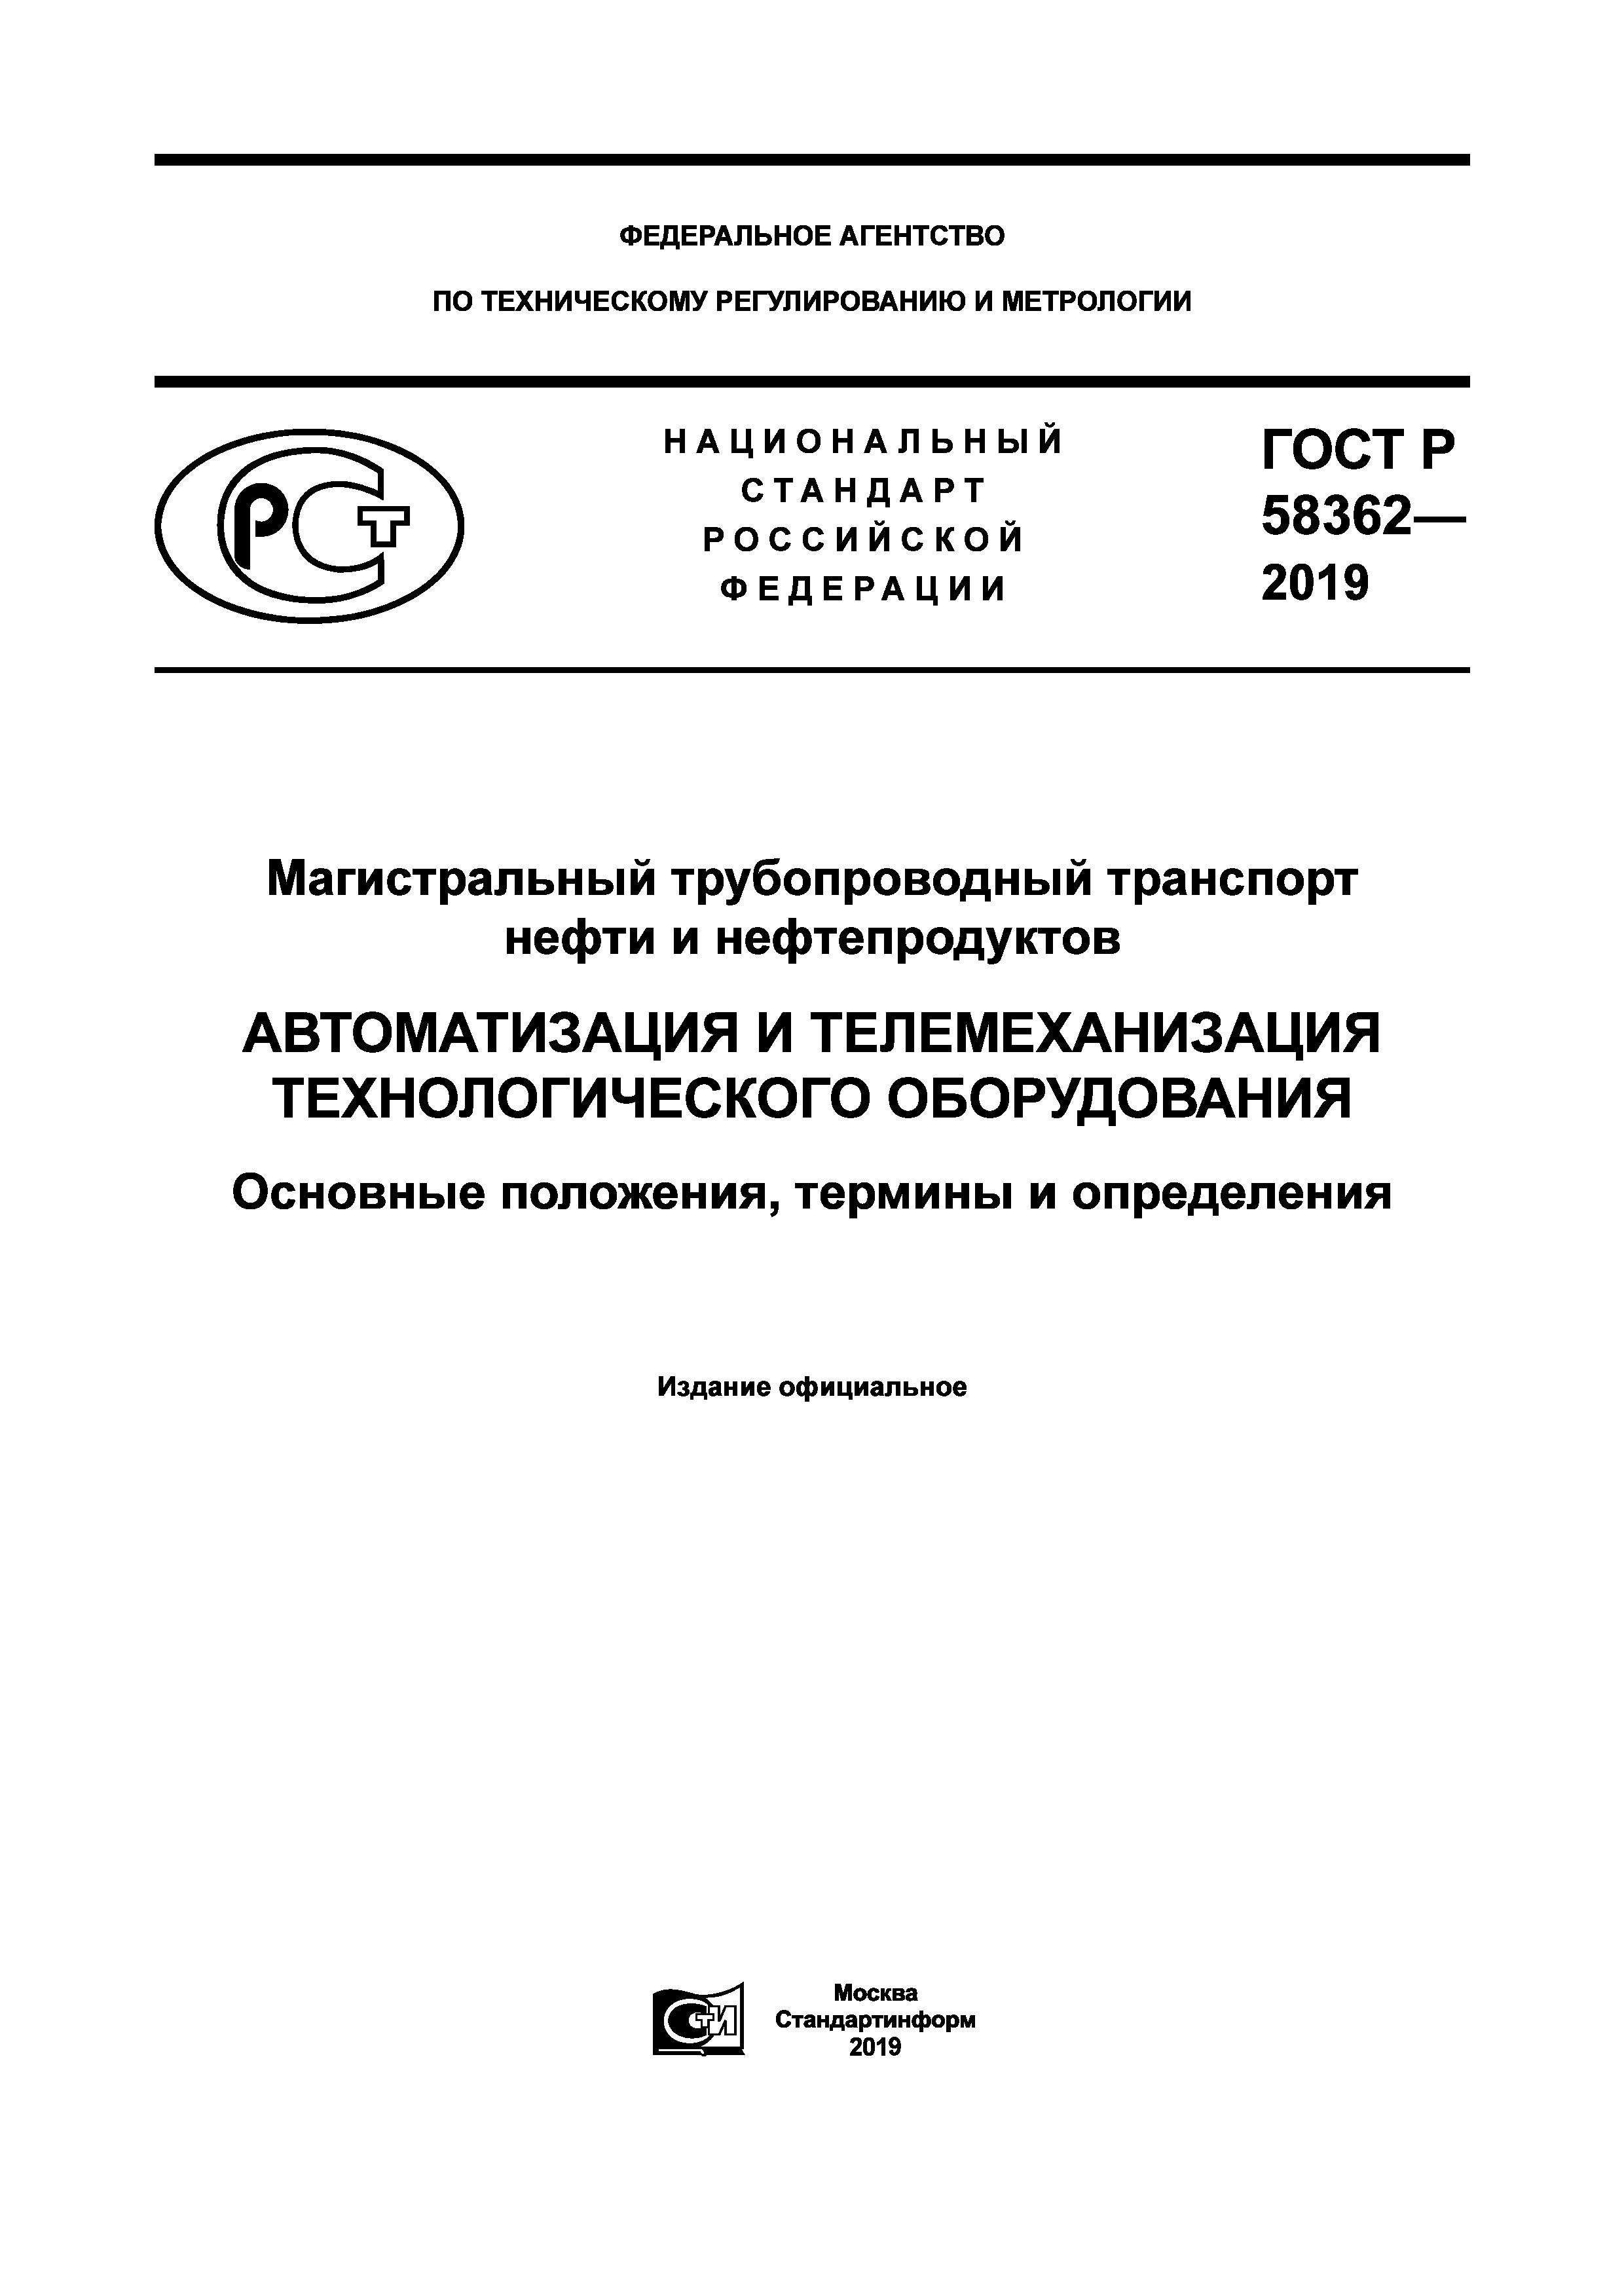 ГОСТ Р 58362-2019